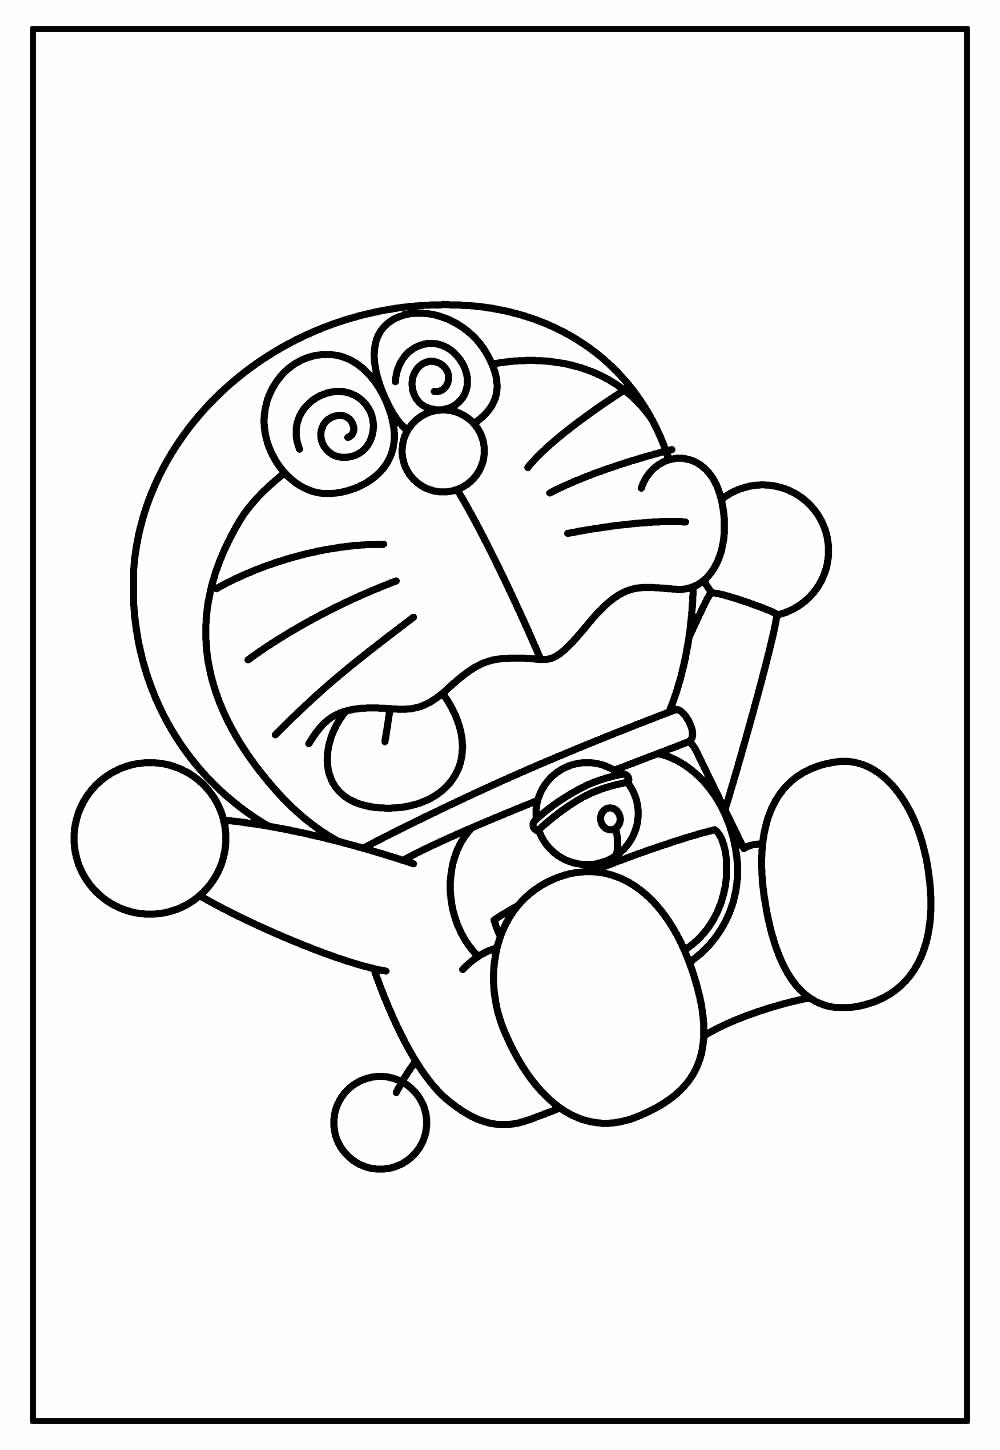 Desenho para pintar e colorir - Doraemon